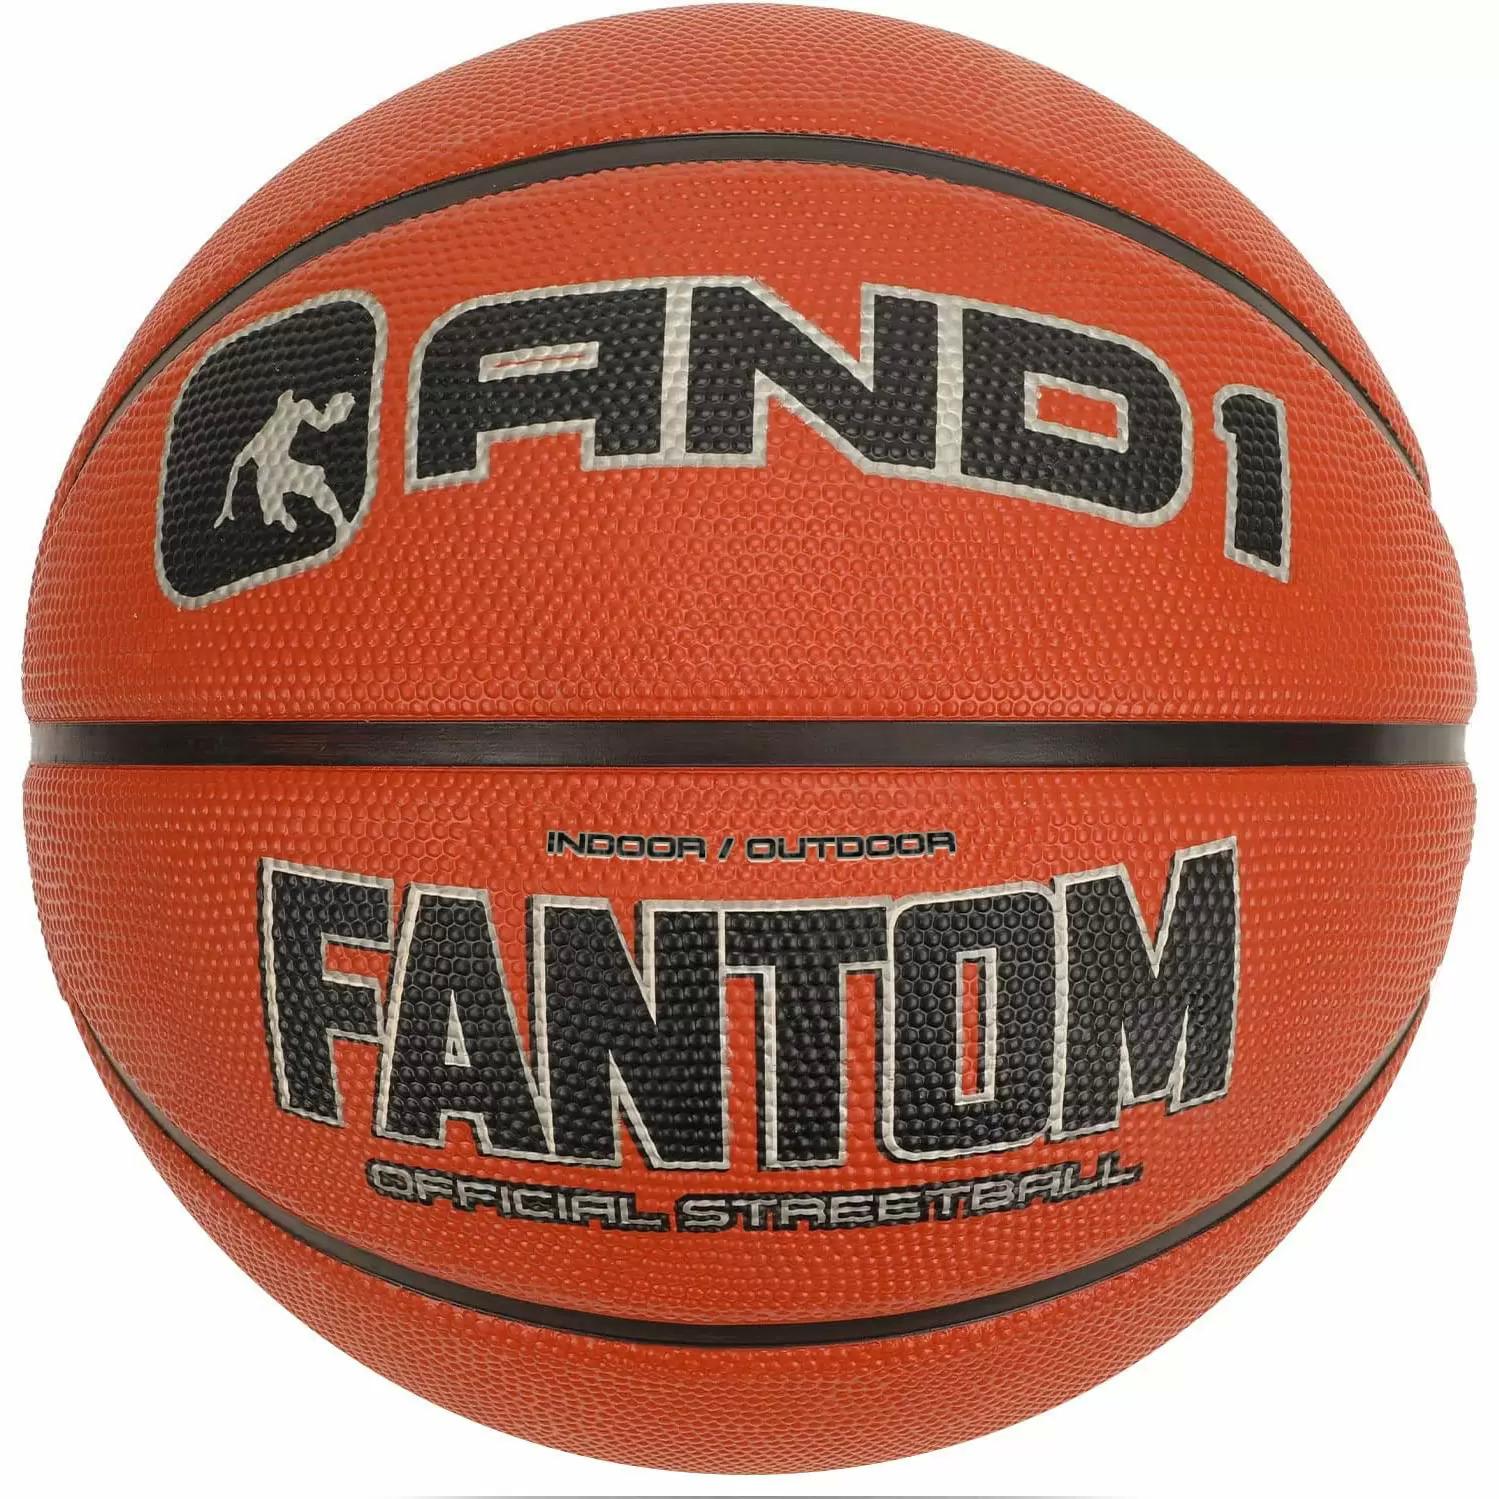 AND1 Fantom Rubber Basketball for $5